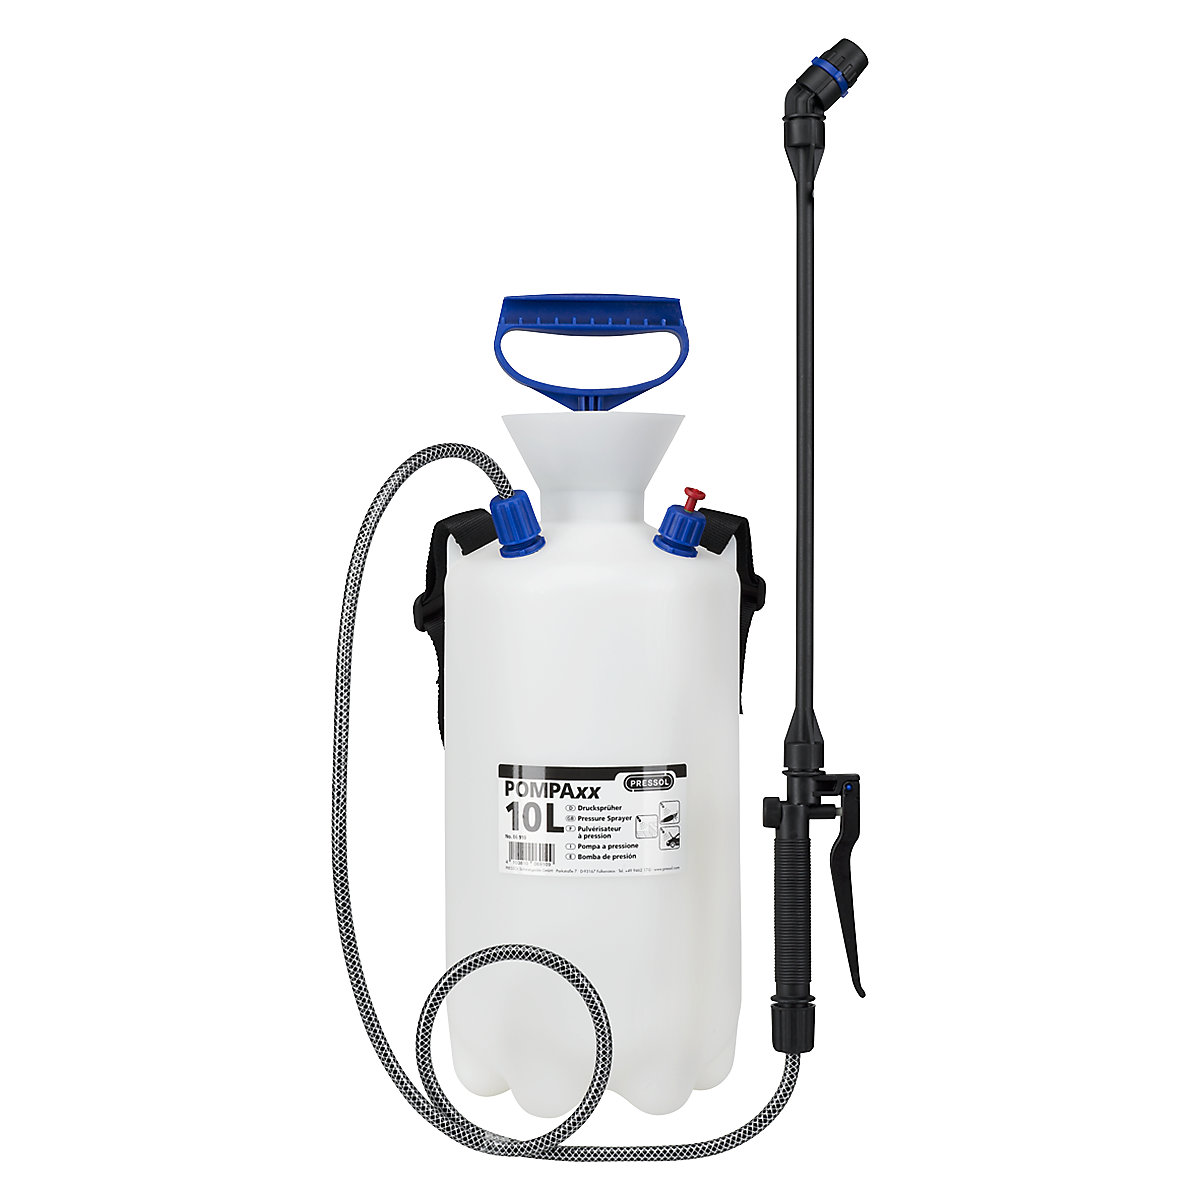 Industrial pressure sprayer – PRESSOL